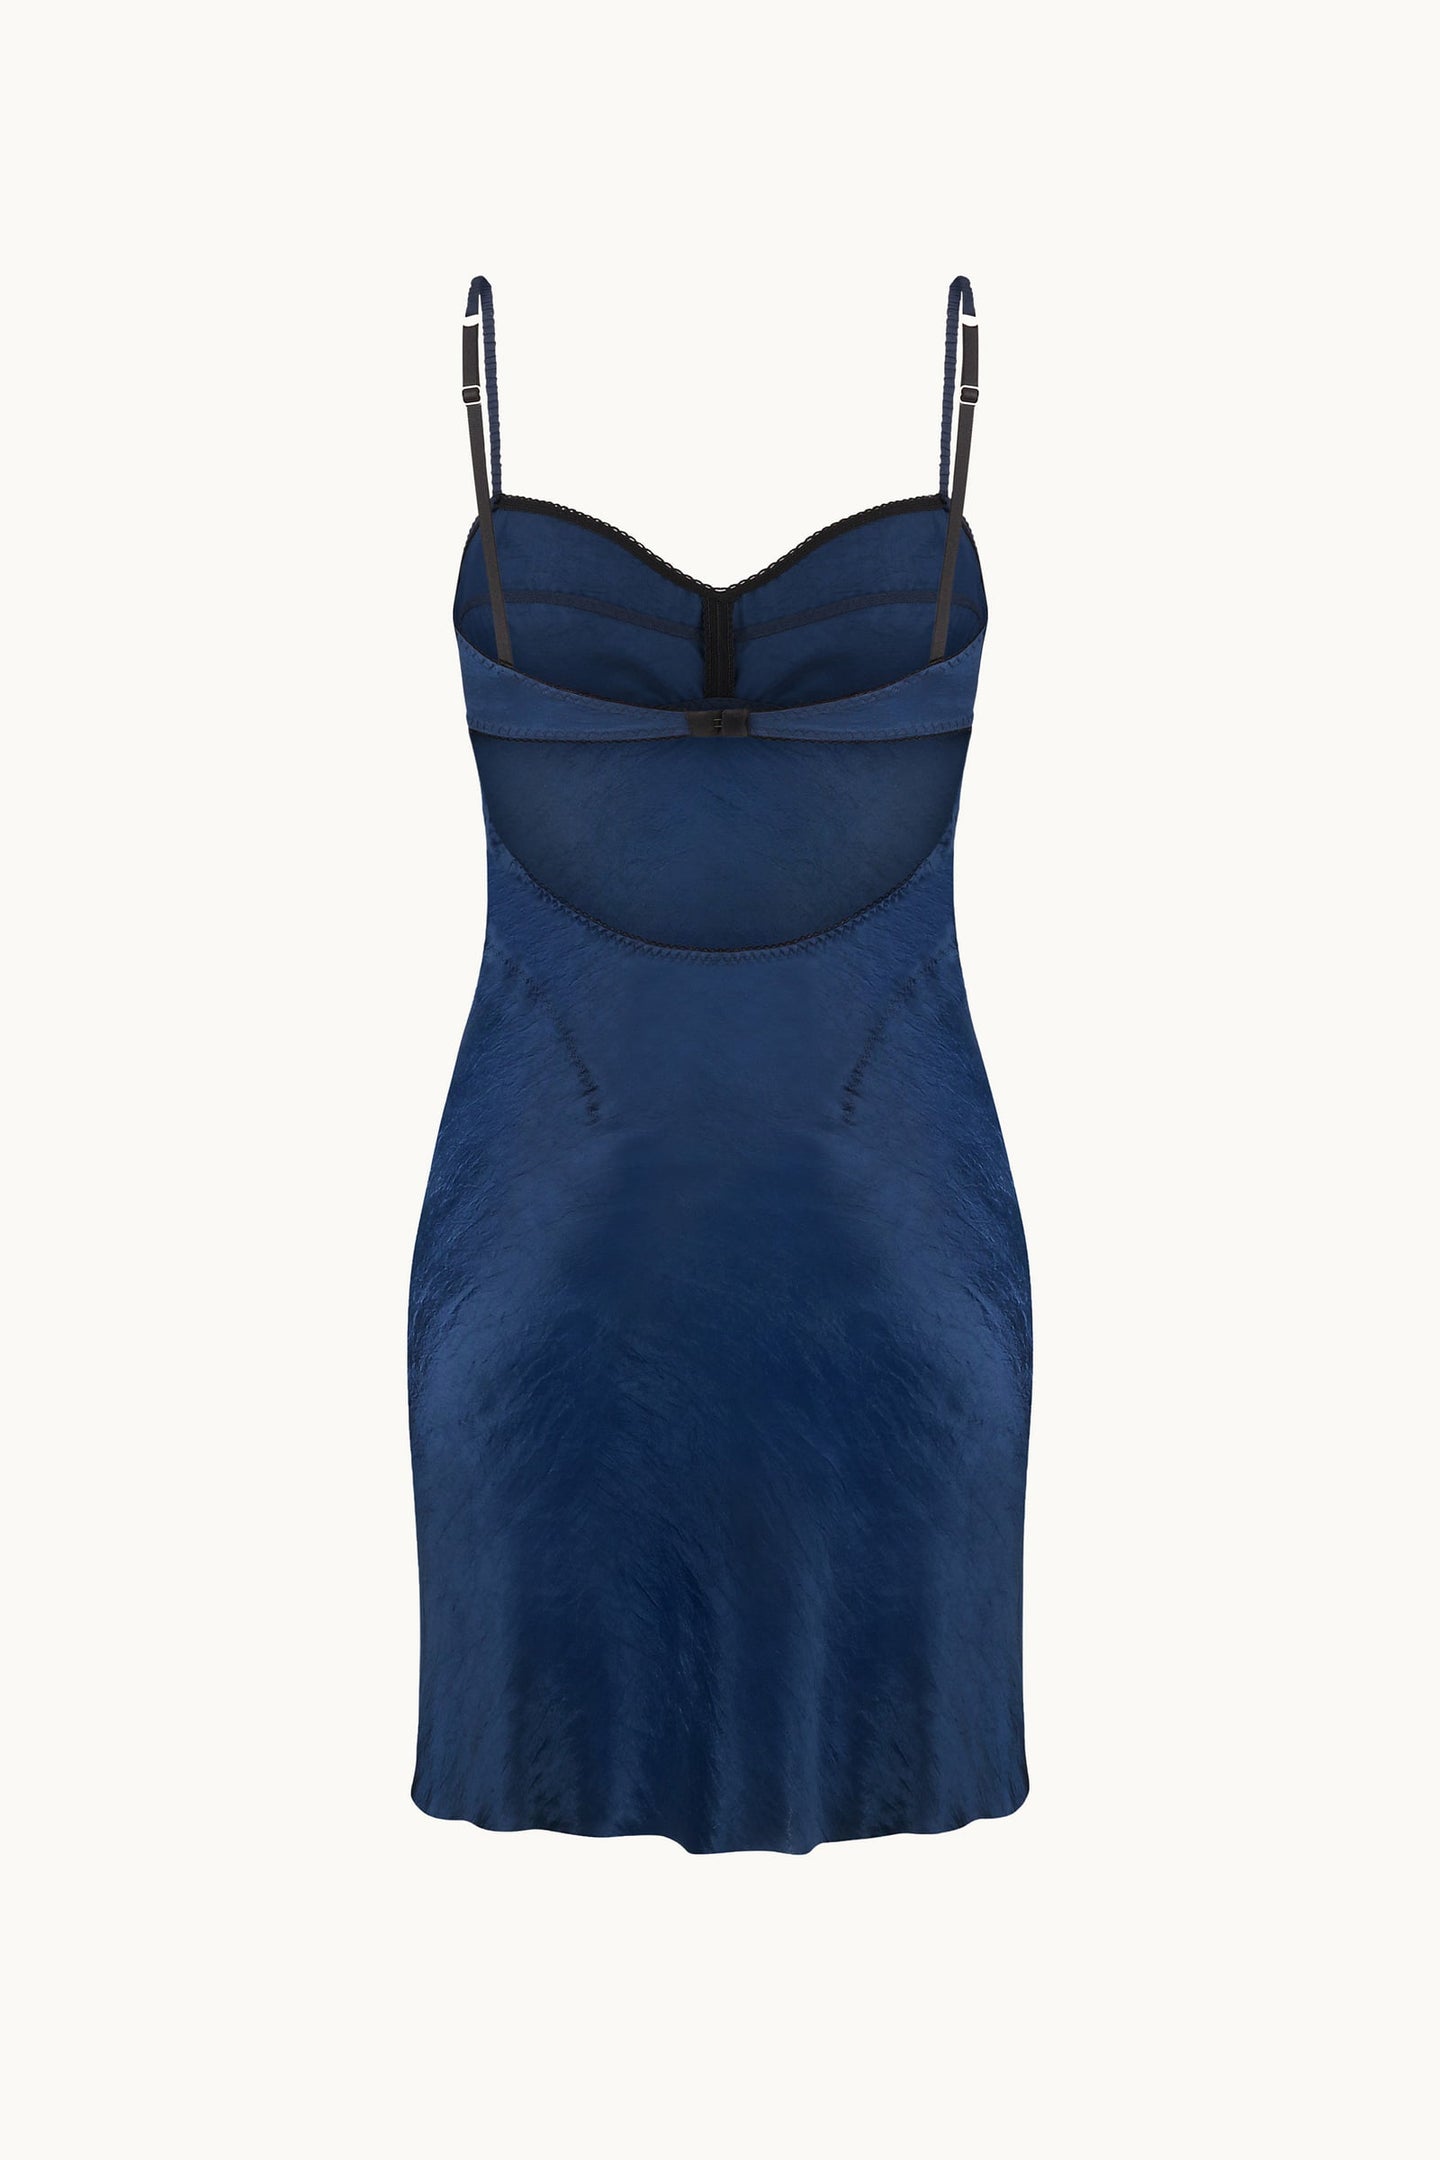 Mini Waterlily dark blue dress back view